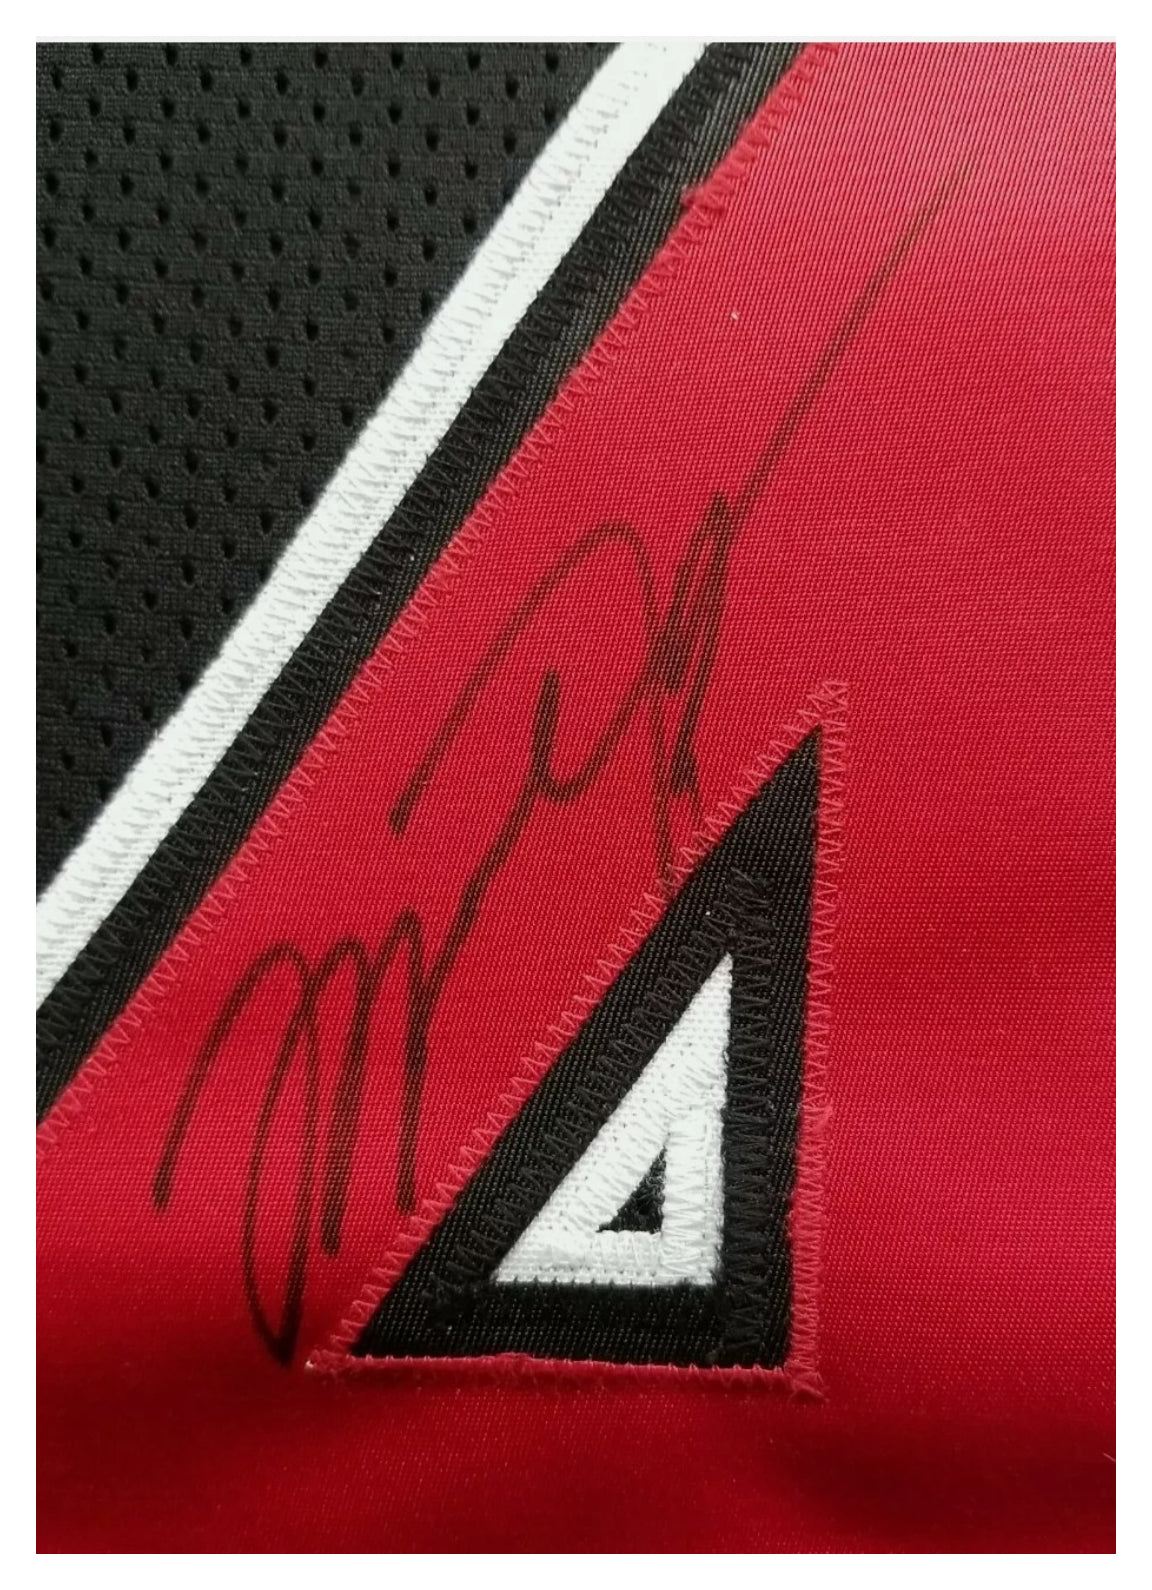 Michael Jordan Autographed Chicago Bulls Jersey Framed